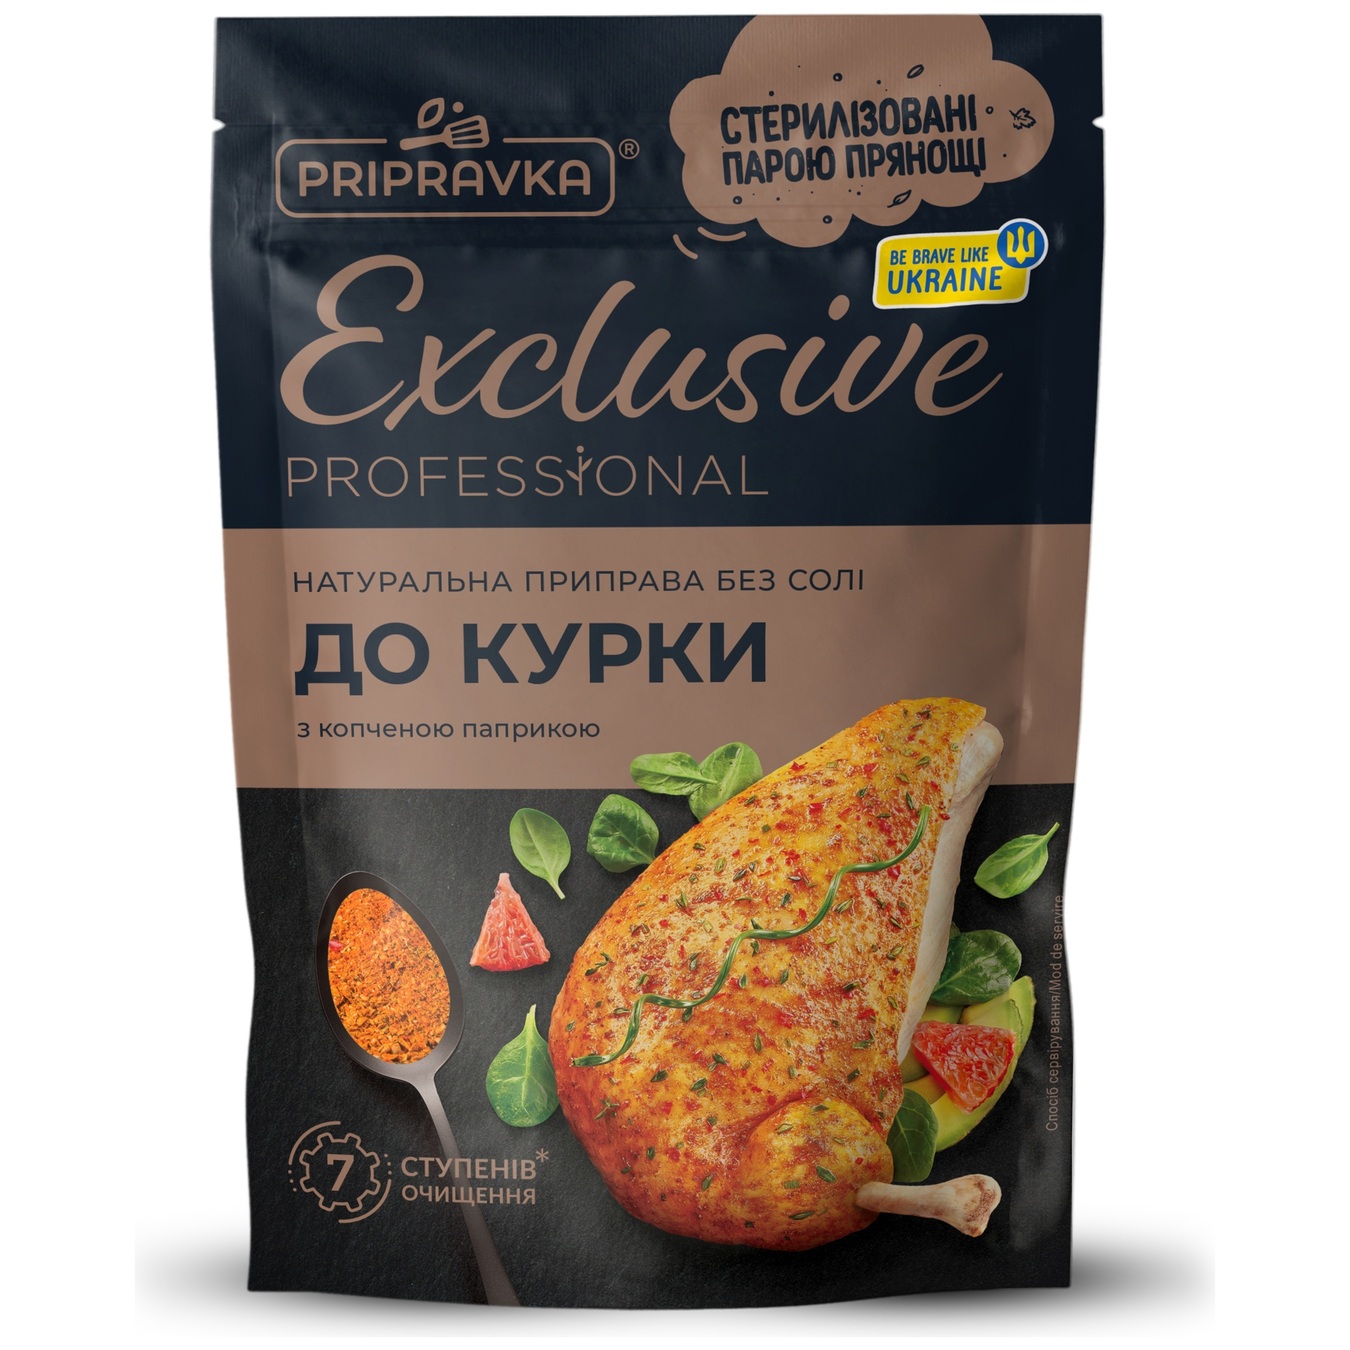 Приправа Pripravka Exclusive Professional для курки натуральна без солі 50г